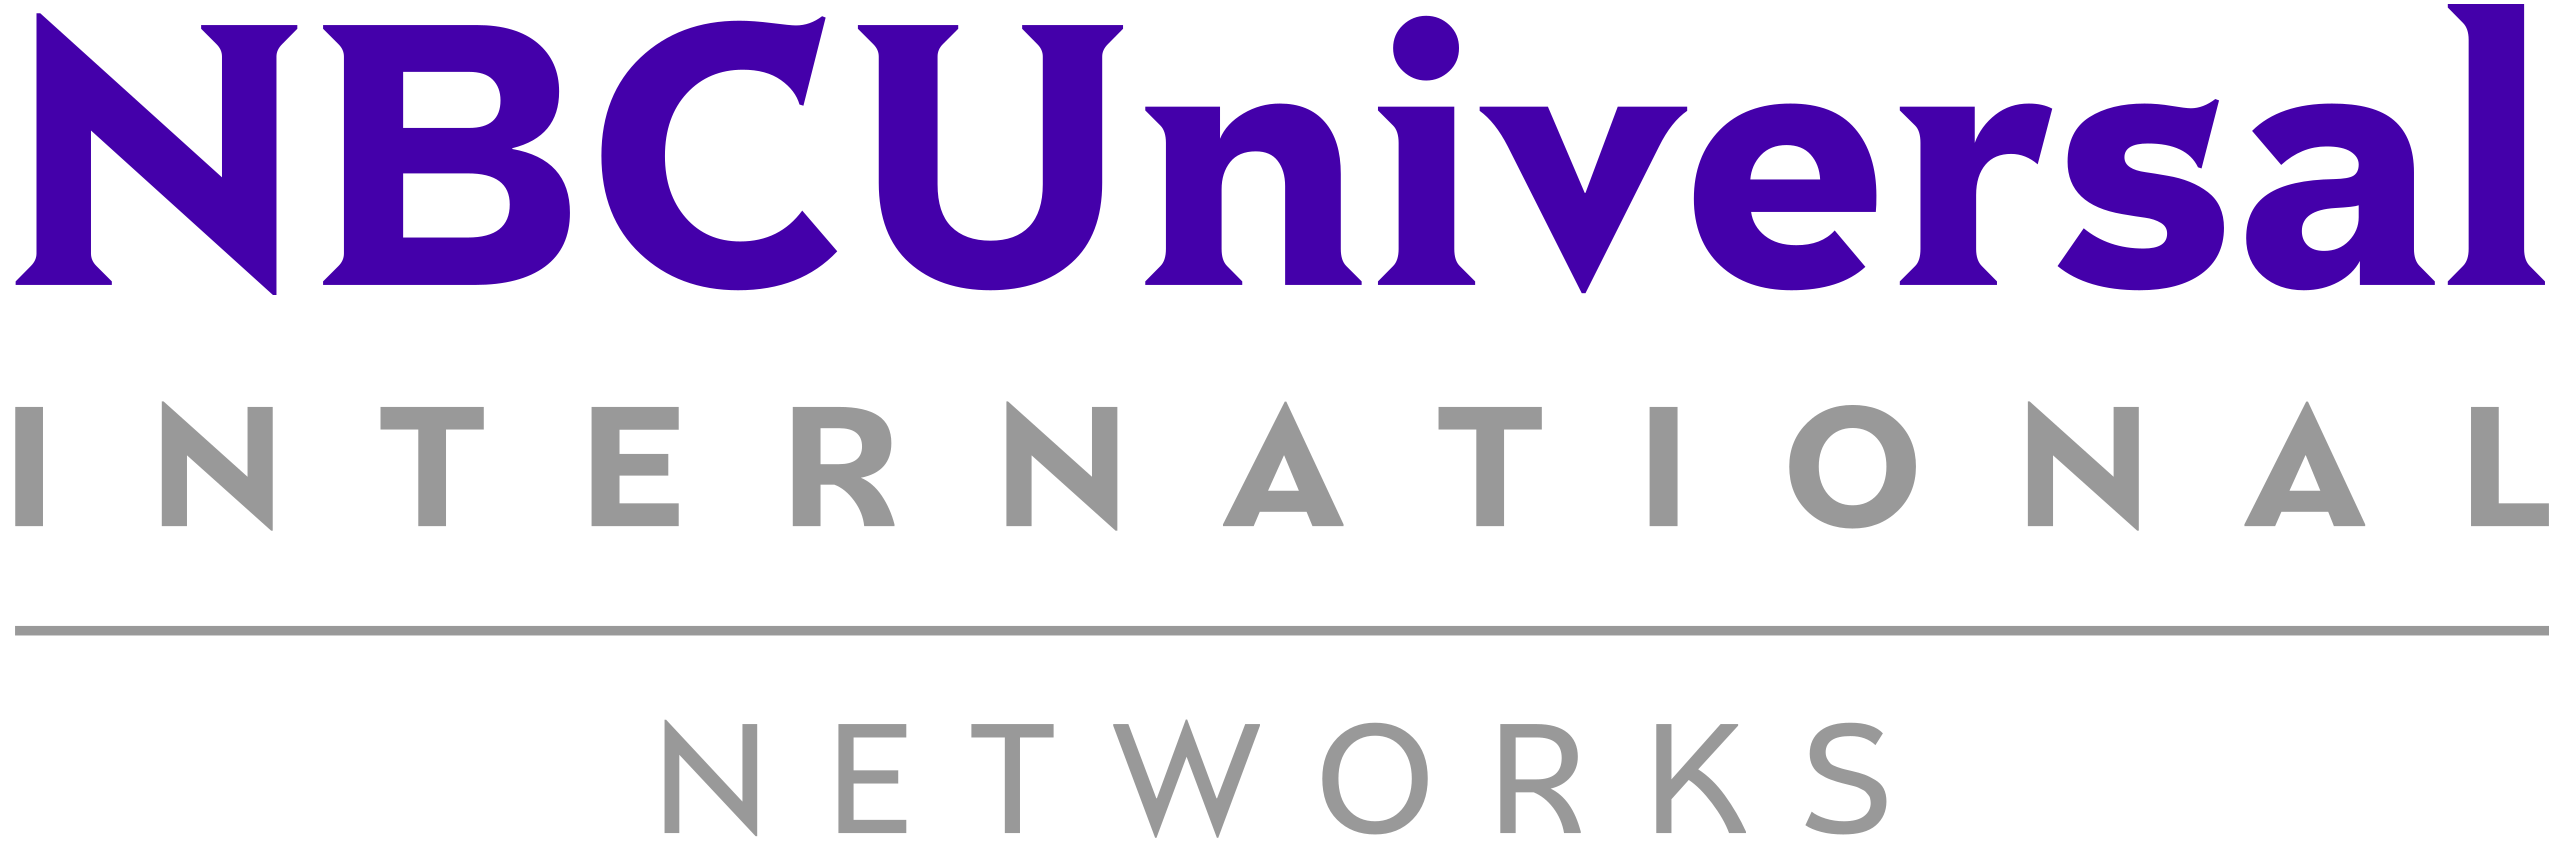 NBCUniversal International Networks